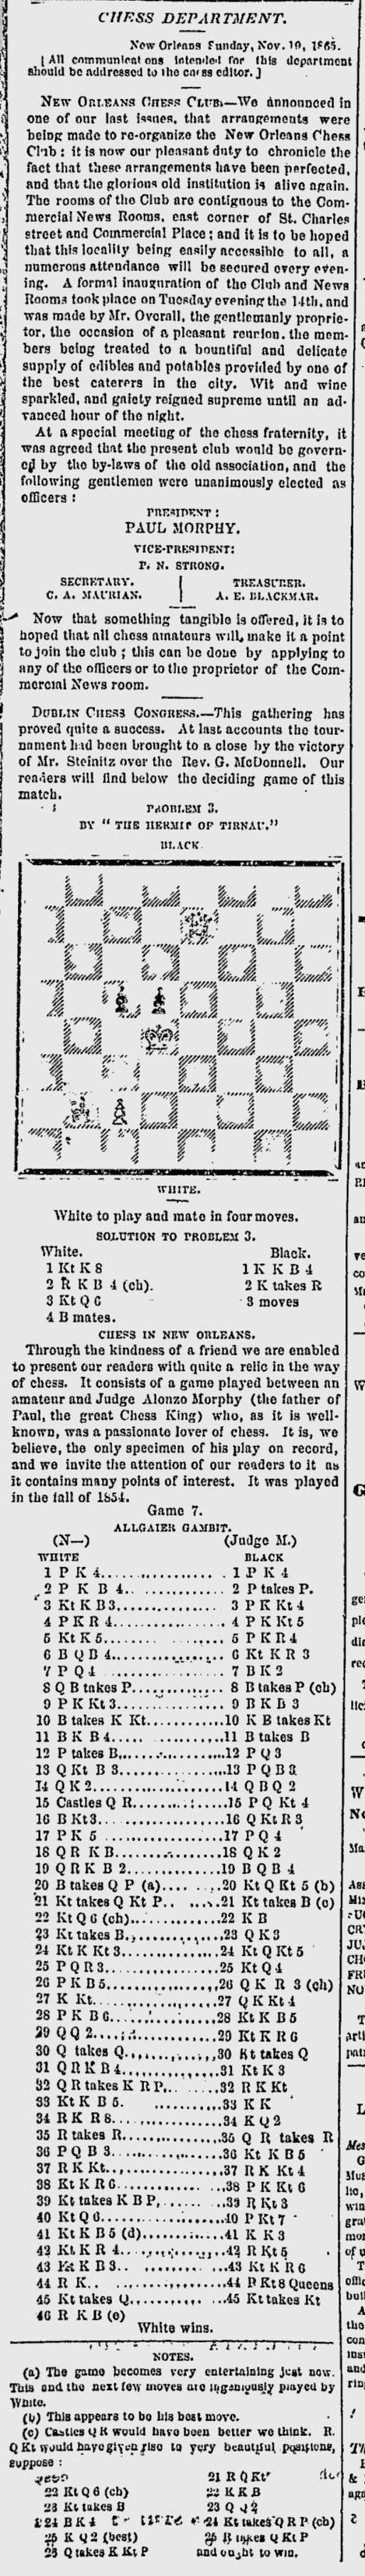 1865.11.19-01 New Orleans Sunday Star.jpg